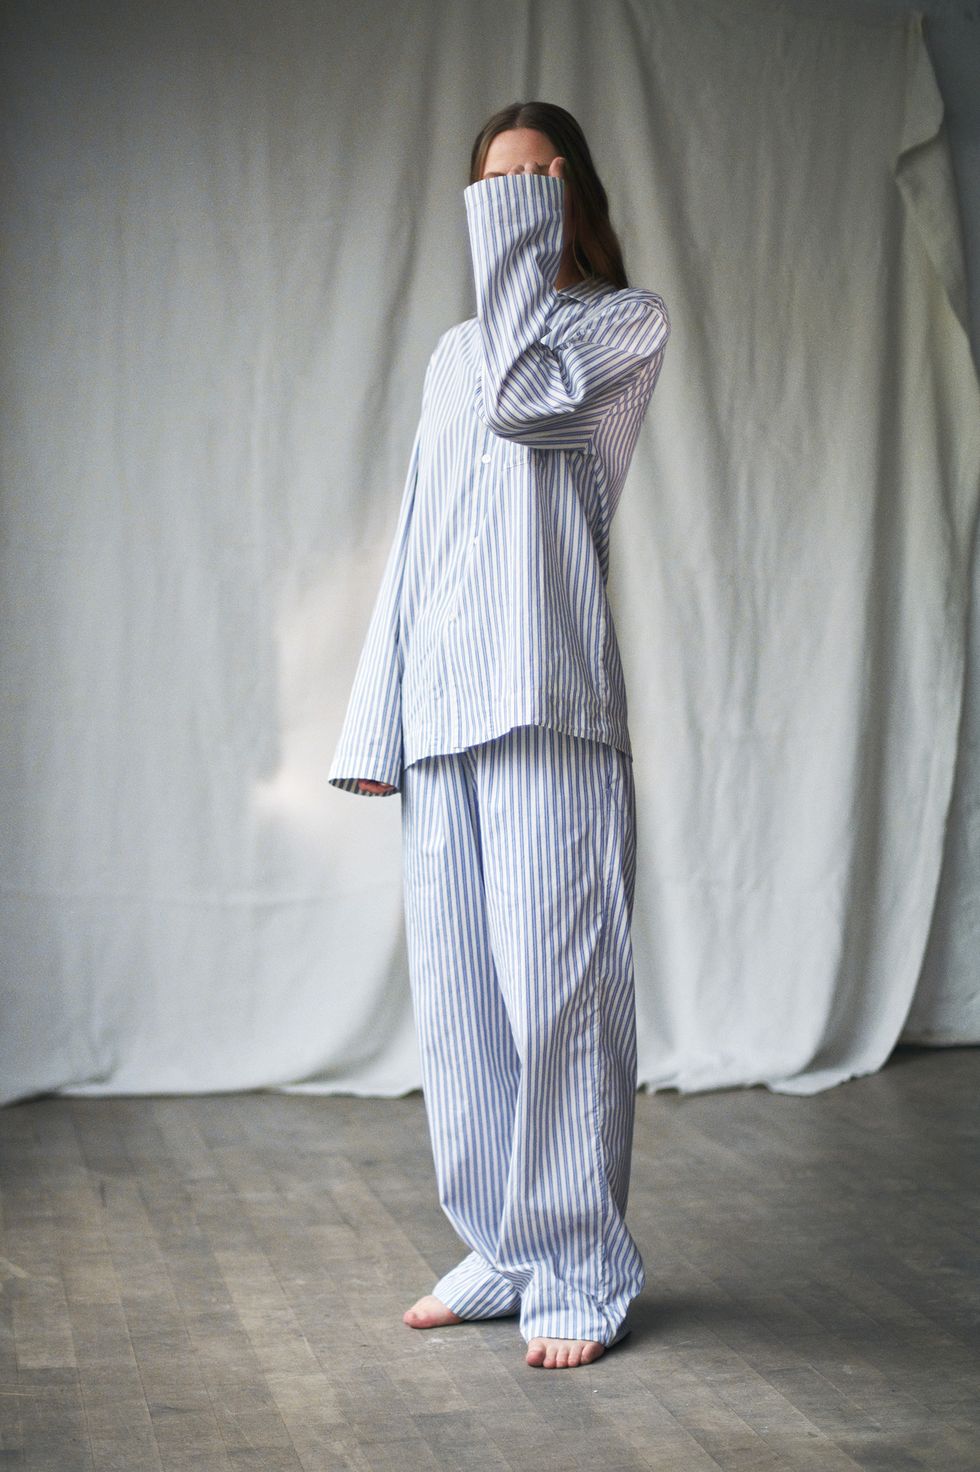 woman wearing striped pyjamas